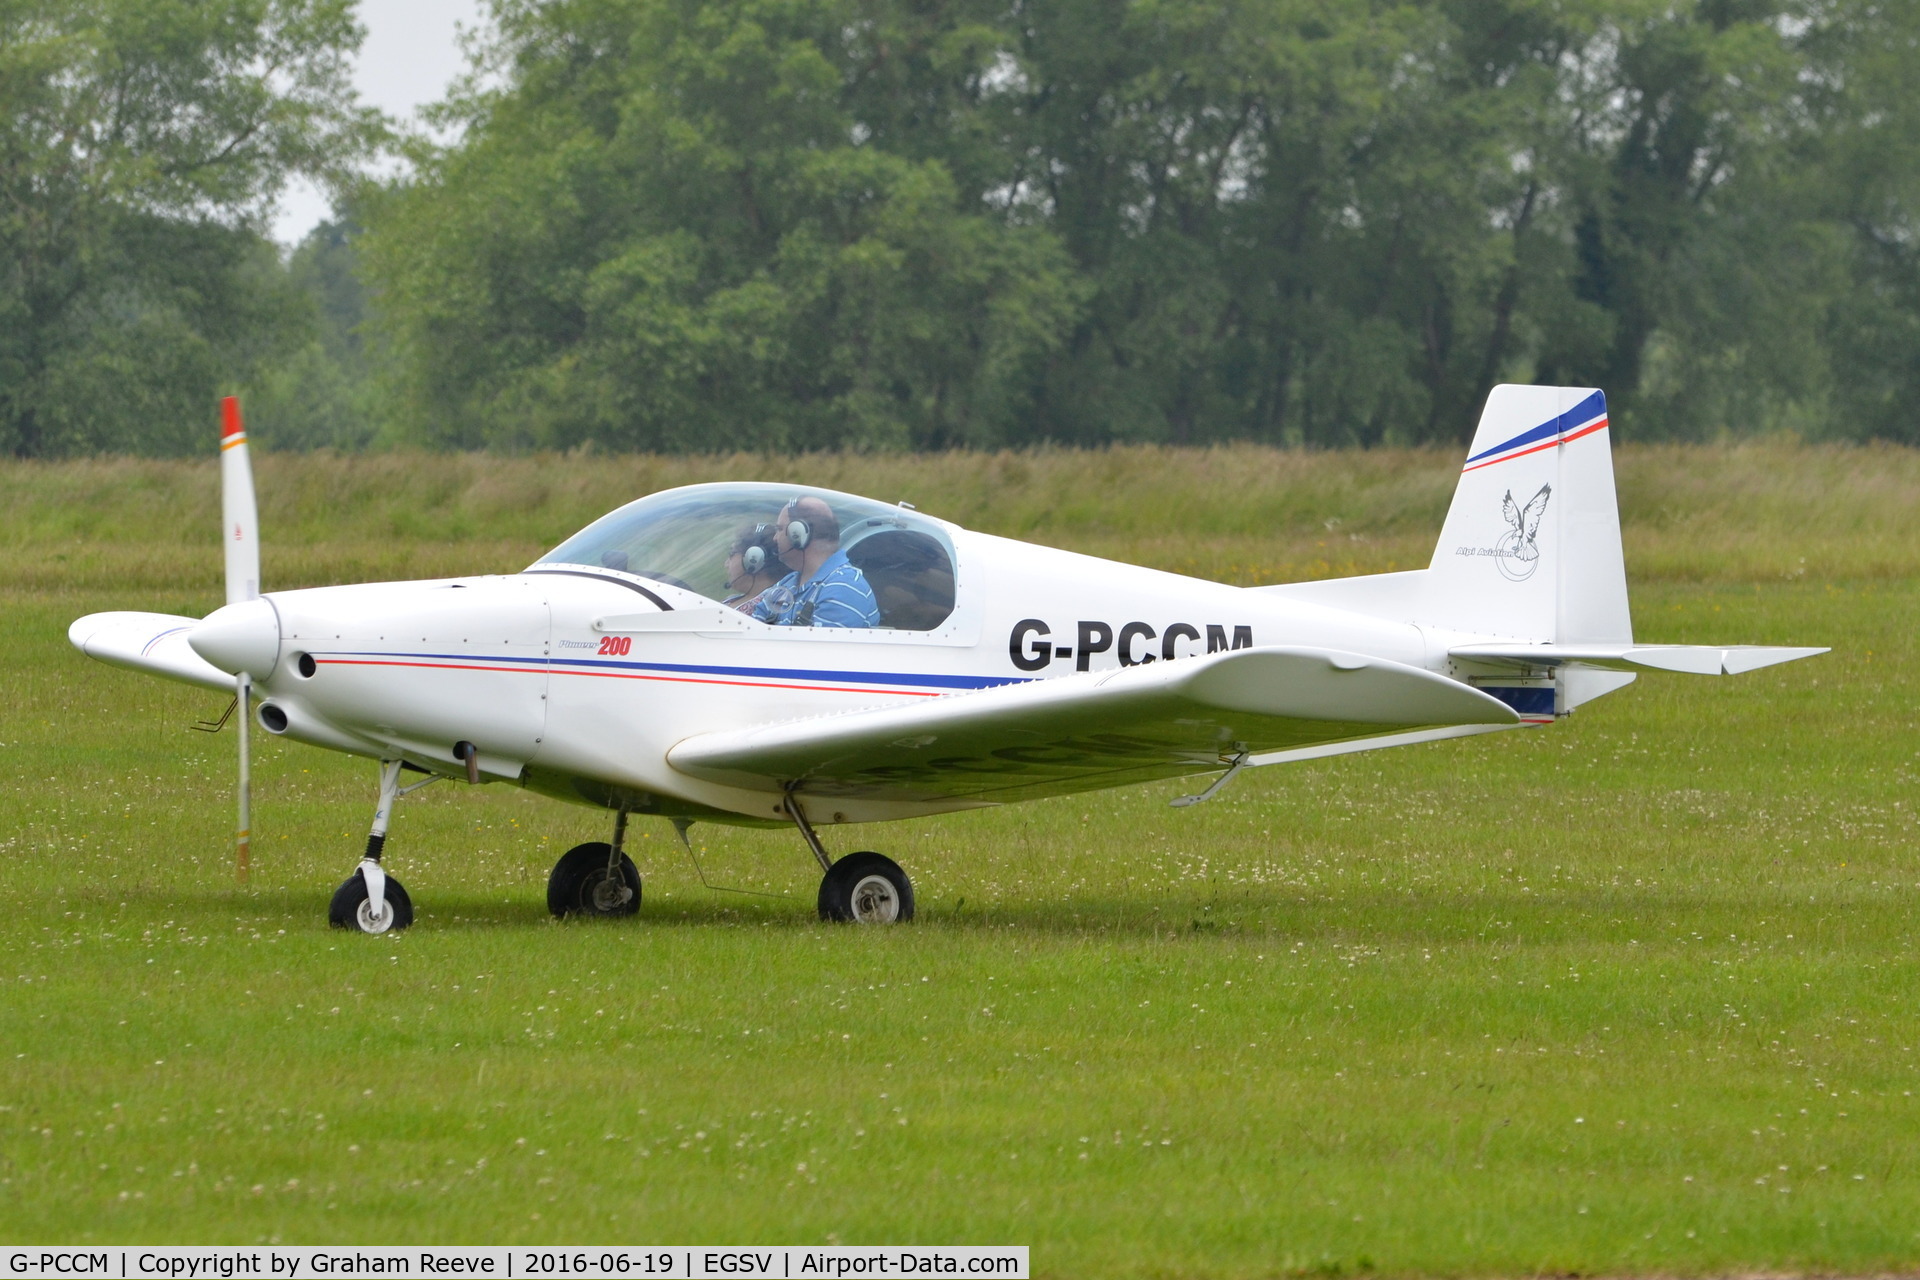 G-PCCM, 2014 Alpi Aviation Pioneer 200-M C/N LAA 334-15250, Just landed at Old Buckenham.